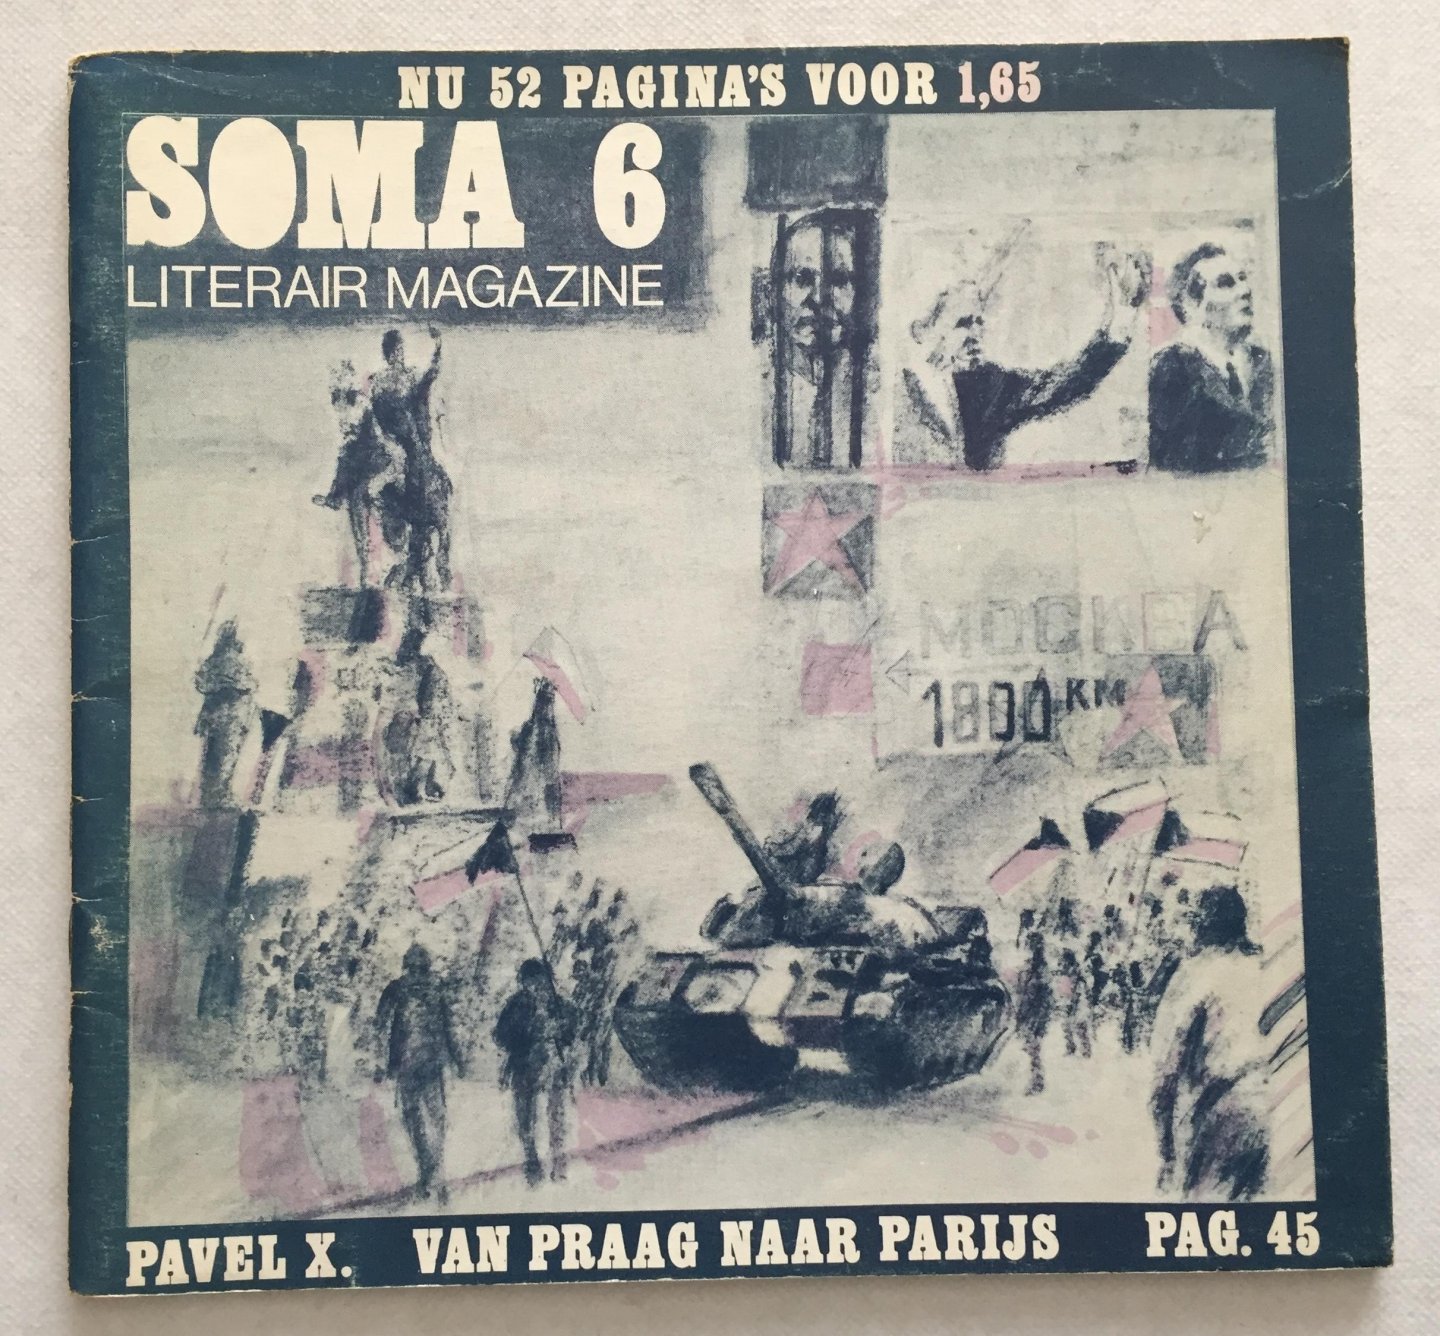 Graftdijk, T., e.a., red., - Soma 6. Literair magazine. 1e jaargang, maart/april 1970